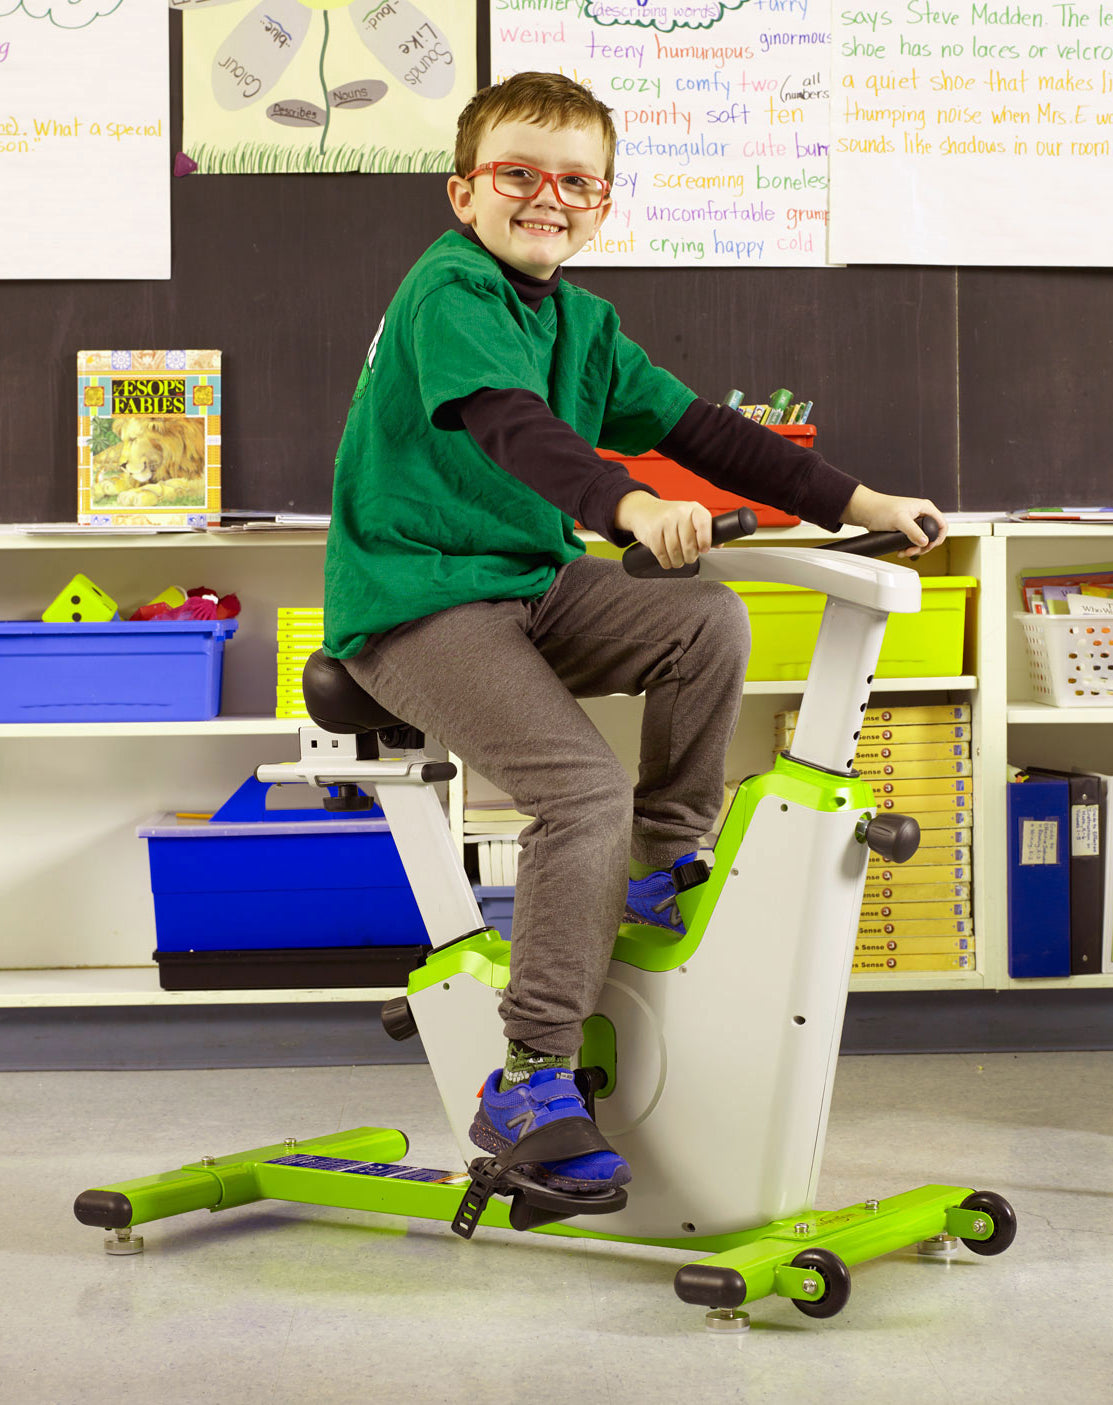 SCC102 Classroom Self-Regulating Bike - Kindergarten to 2nd Grade - Without Work Surface